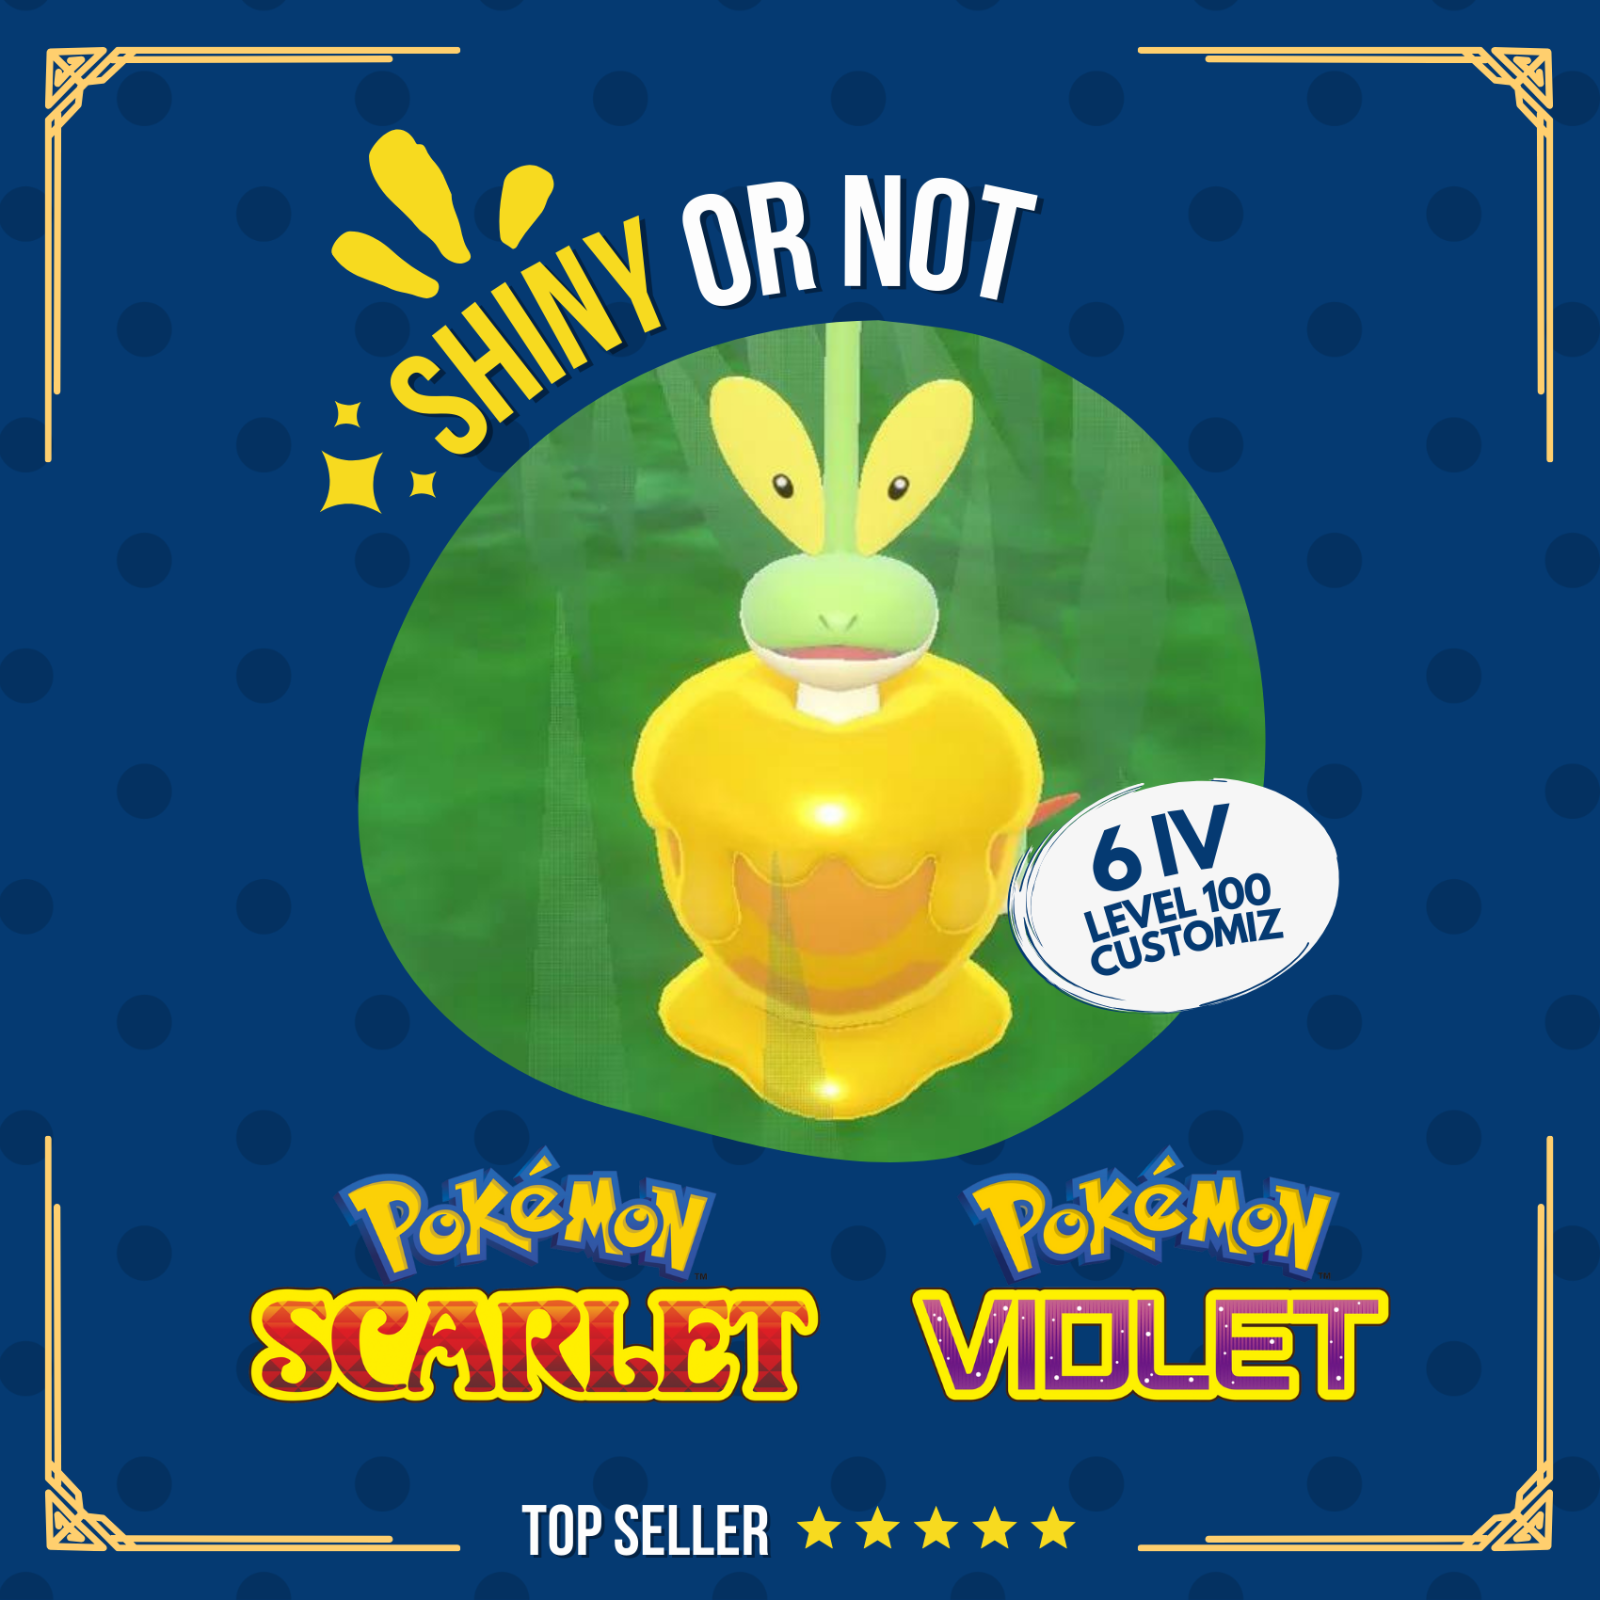 Dipplin Shiny or Non ✨ 6 IV Competitive Customizable Pokémon Scarlet Violet by Shiny Living Dex | Shiny Living Dex